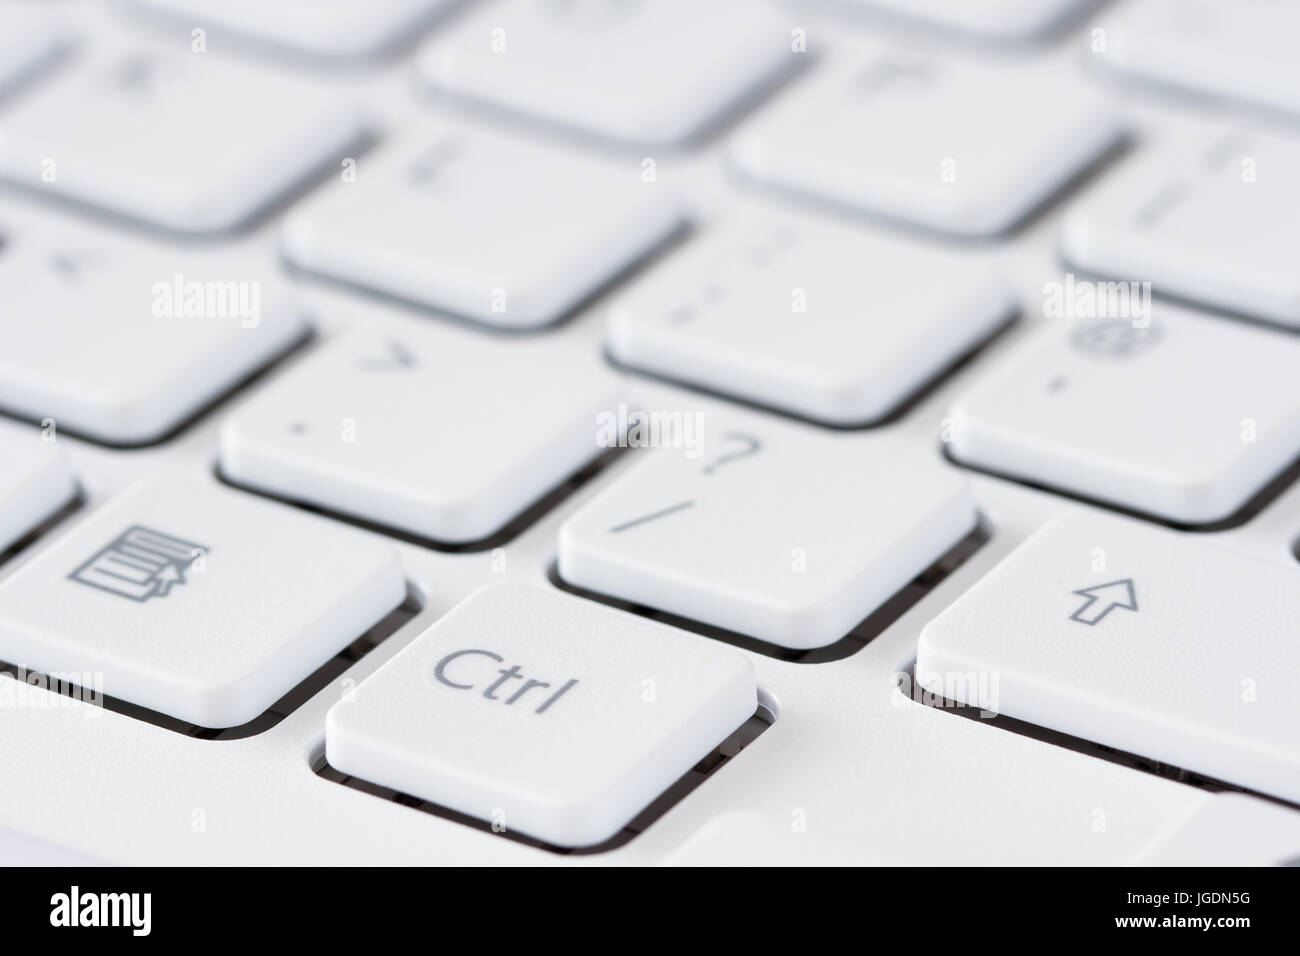 Tastiera per computer closeup, bianco grigio, focus sul tasto Ctrl Foto Stock